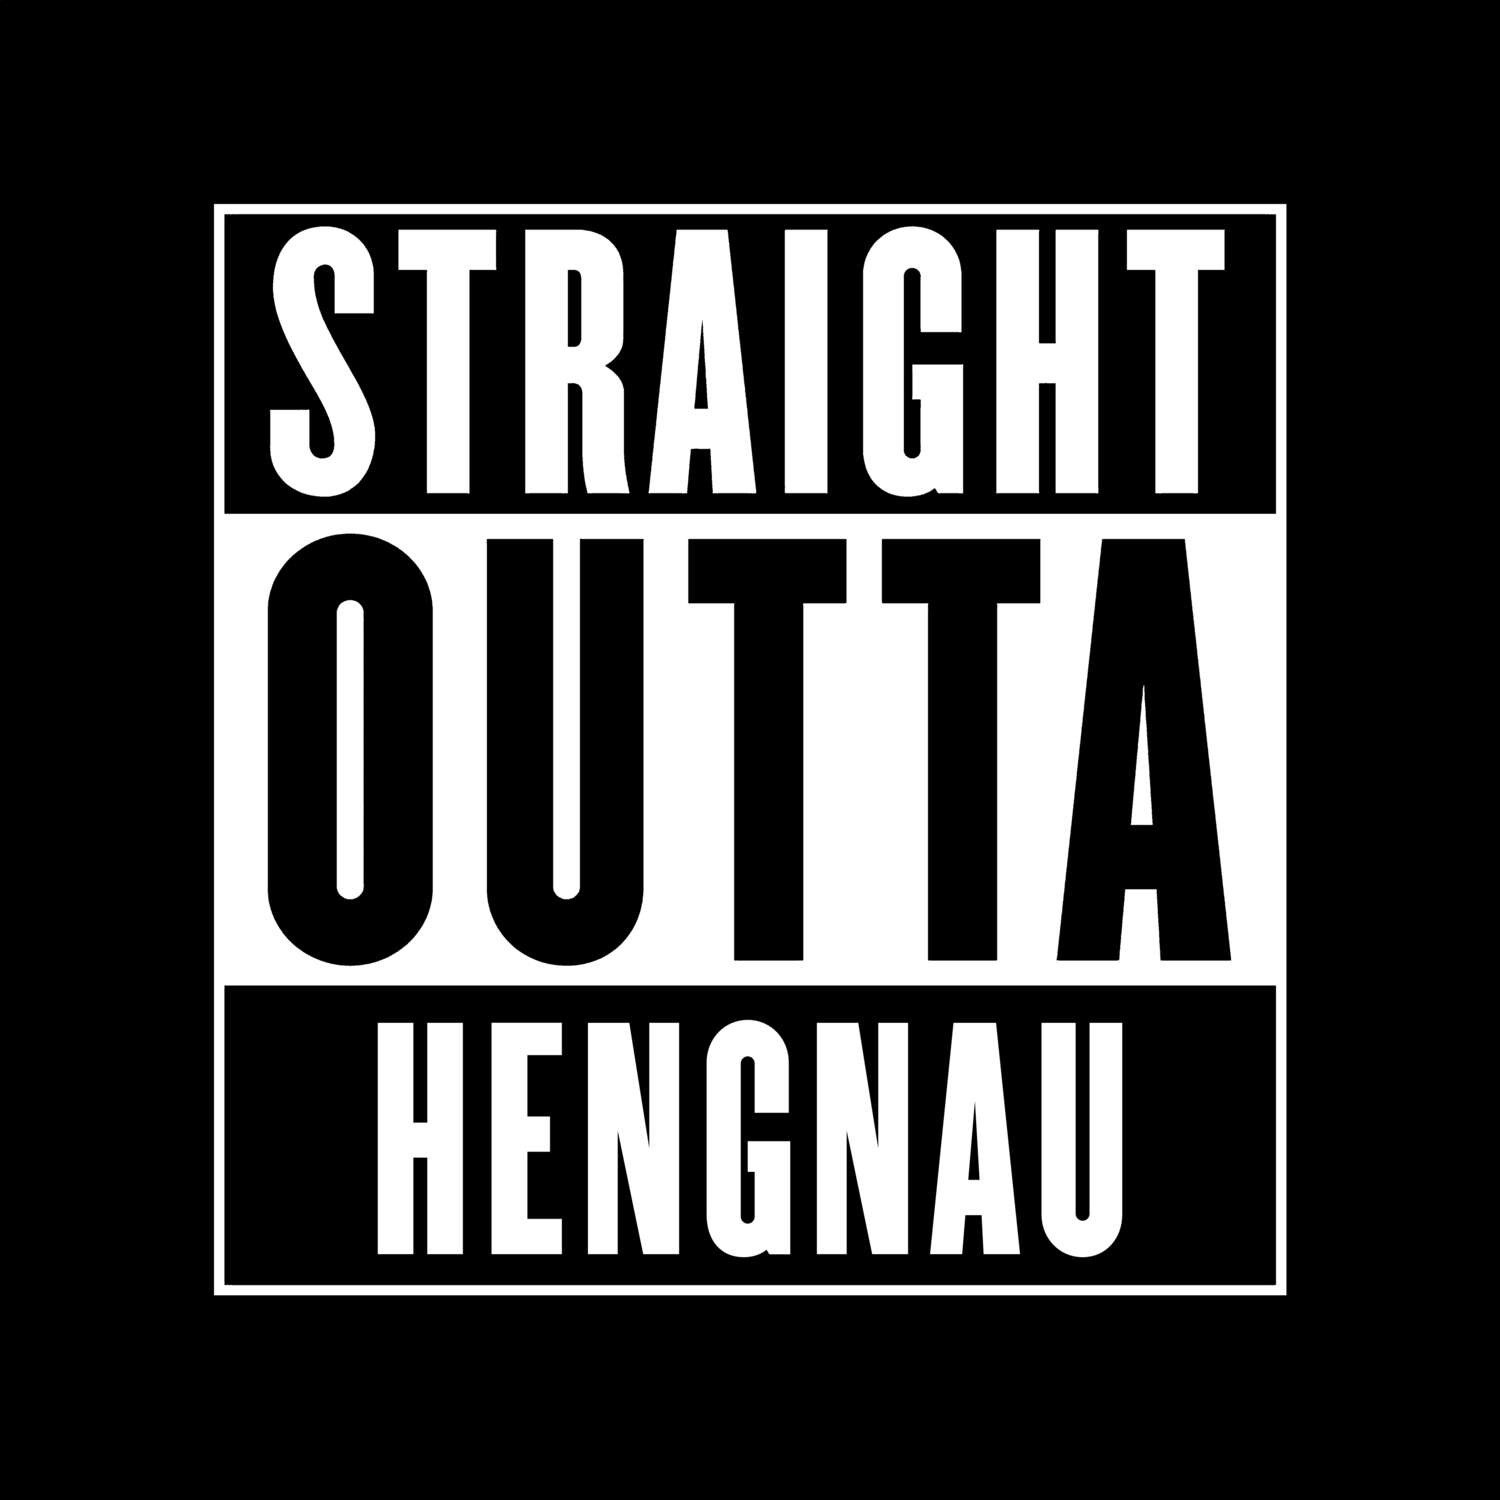 Hengnau T-Shirt »Straight Outta«